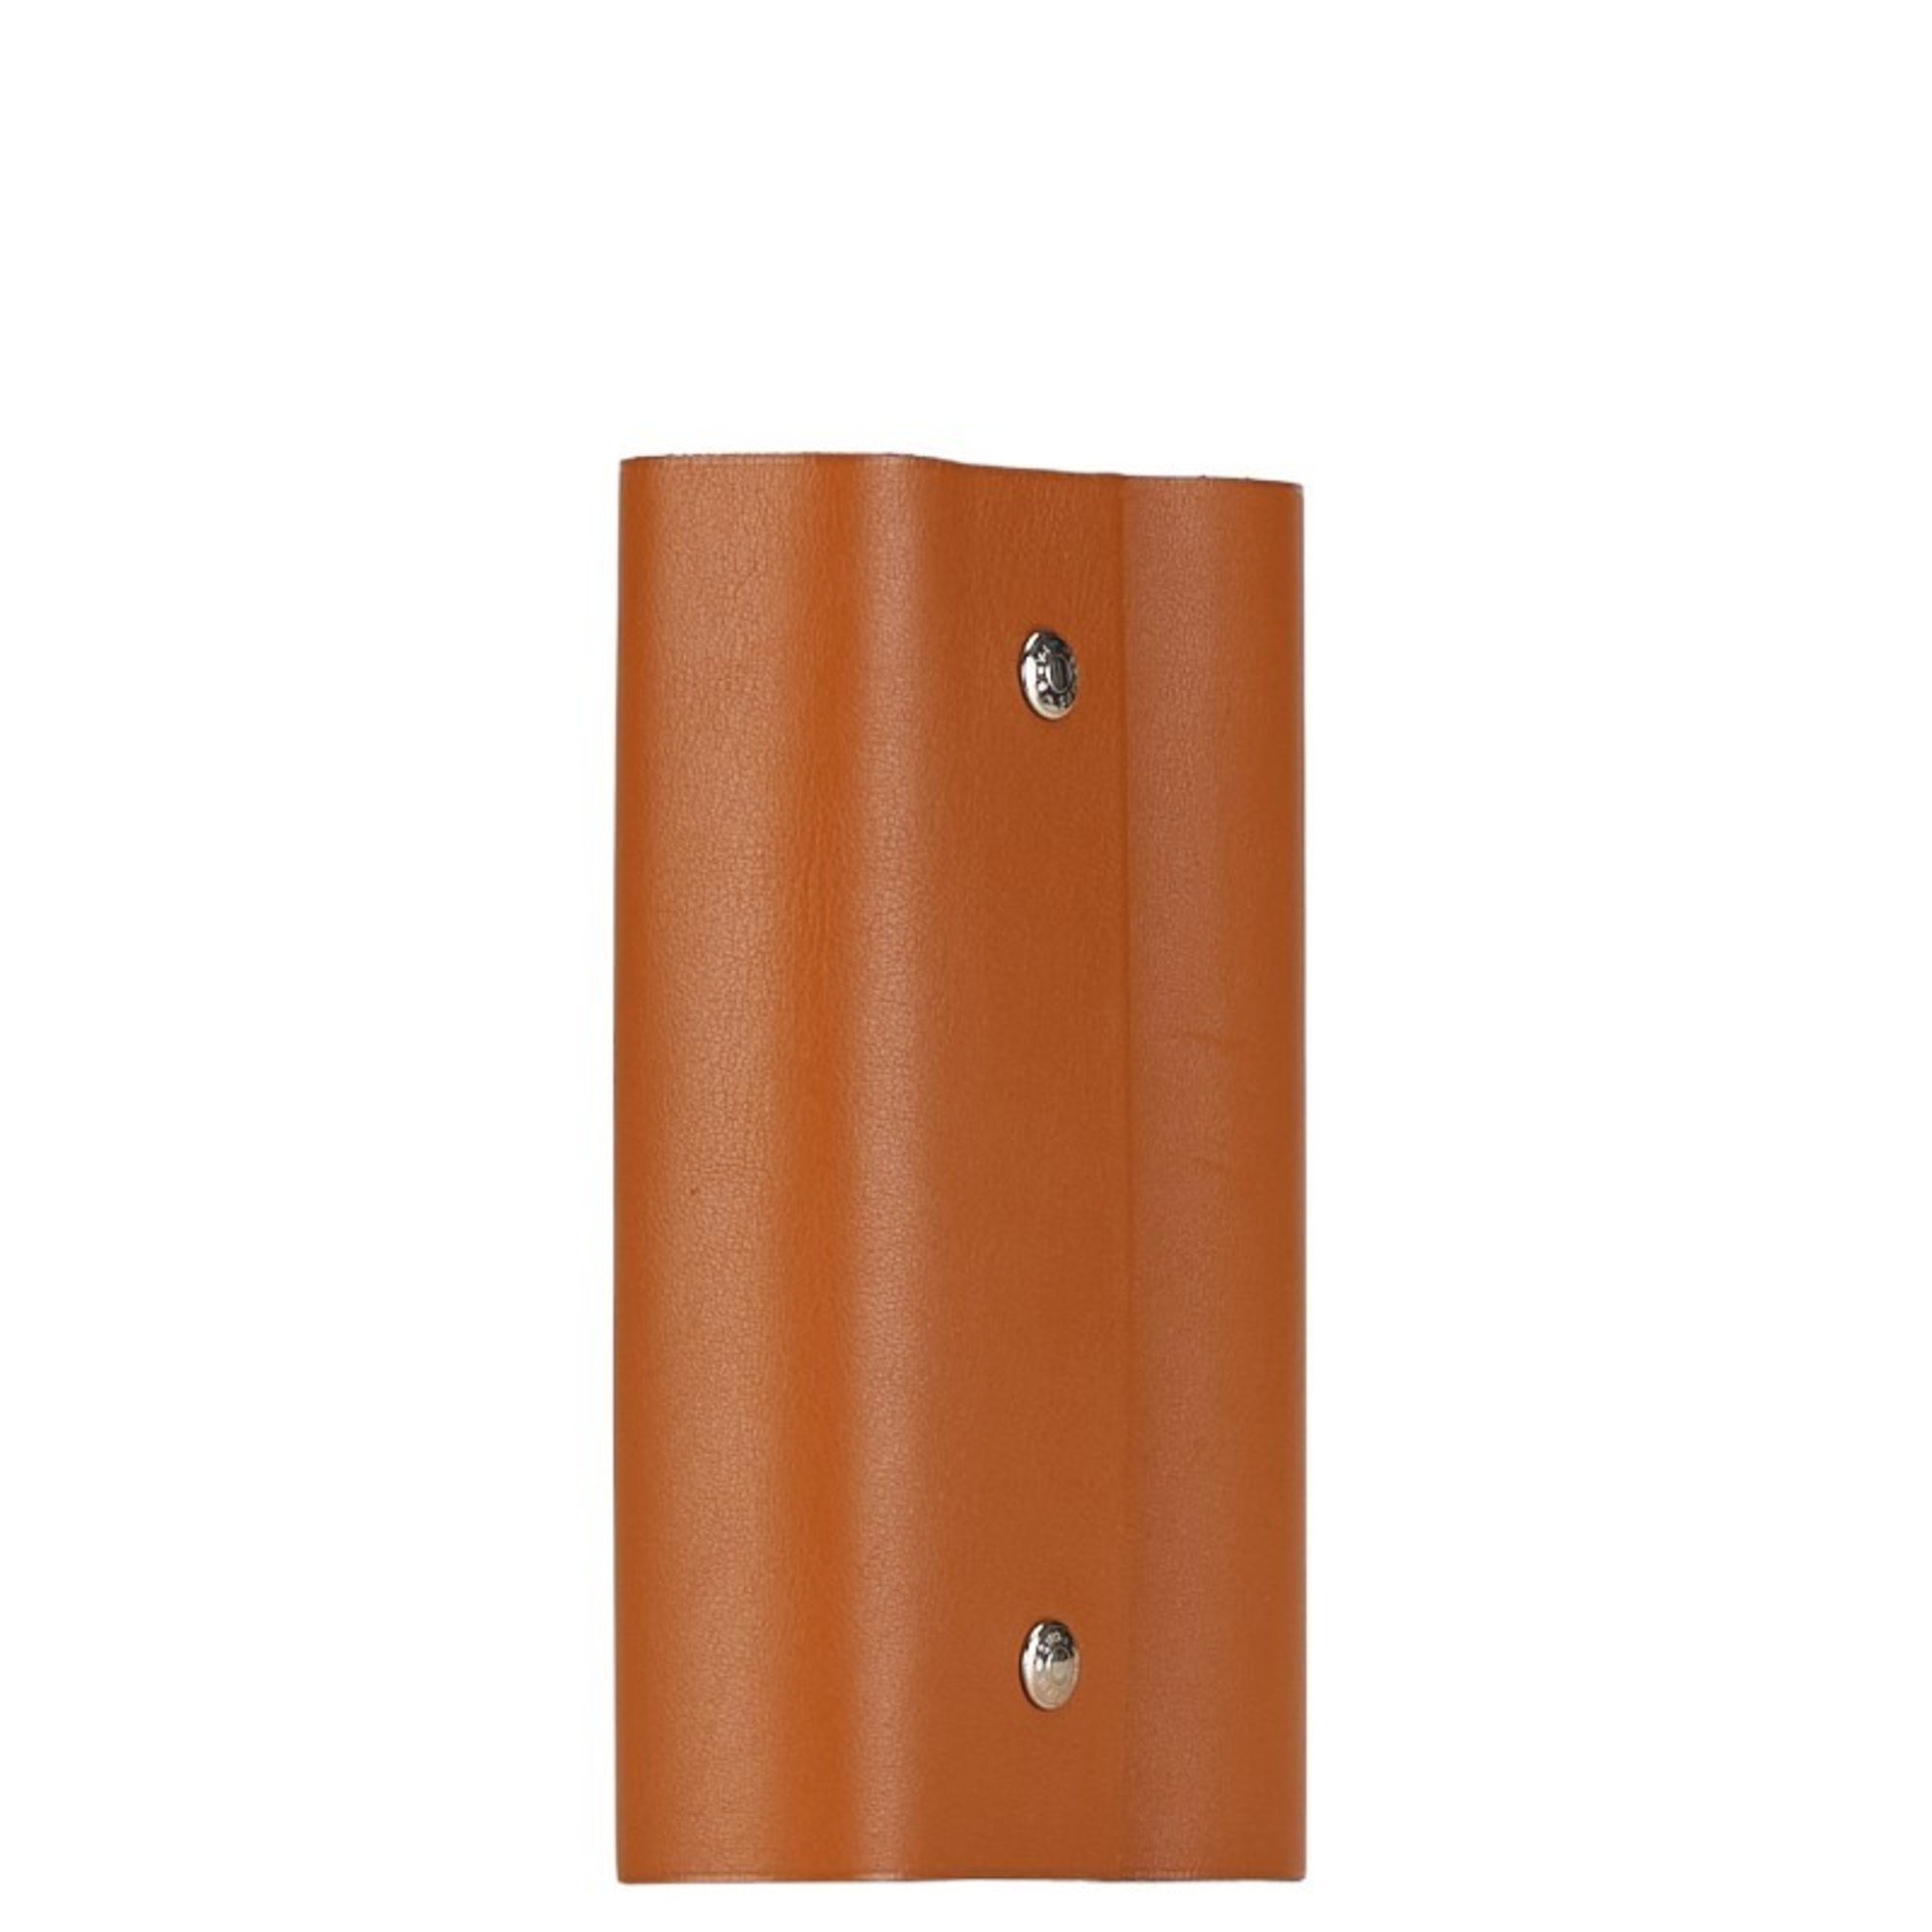 Hermes Cahier Roulet Roll Notebook Planner Cover 12 Holes Brown Chevre Women's HERMES